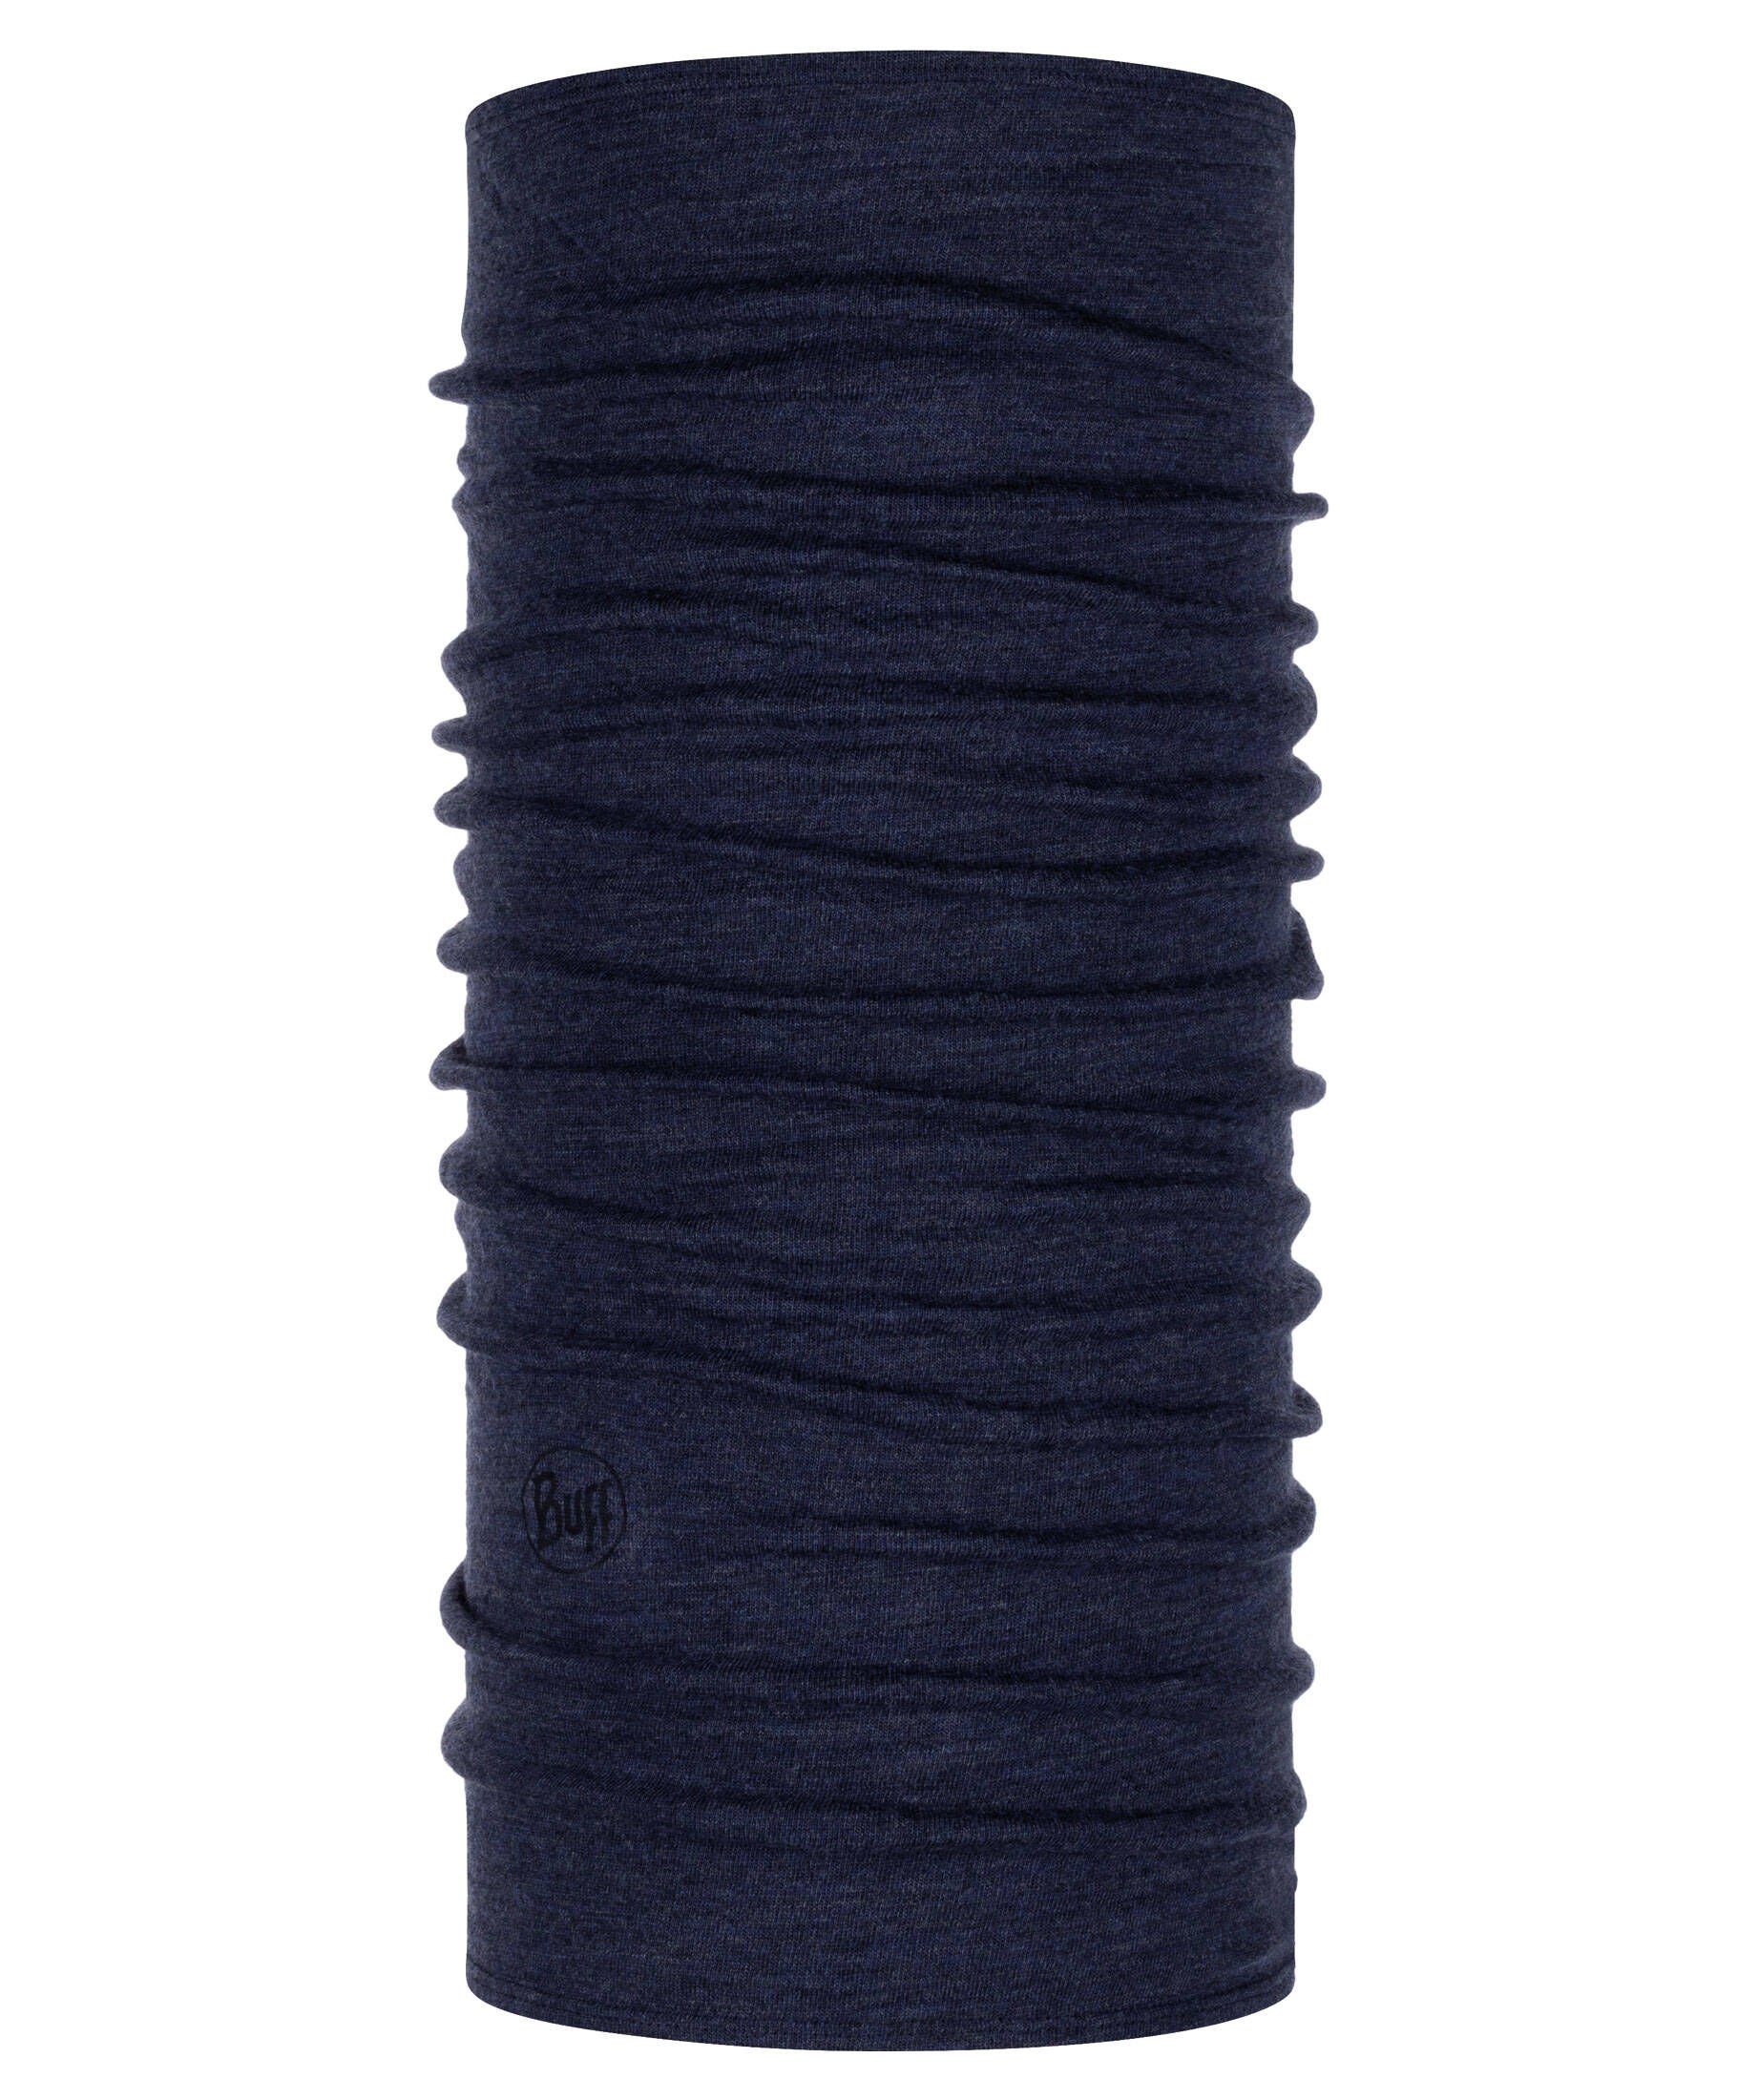 Loop (301) "Midweight Wool" Buff Multifunktionstuch nachtblau Merino